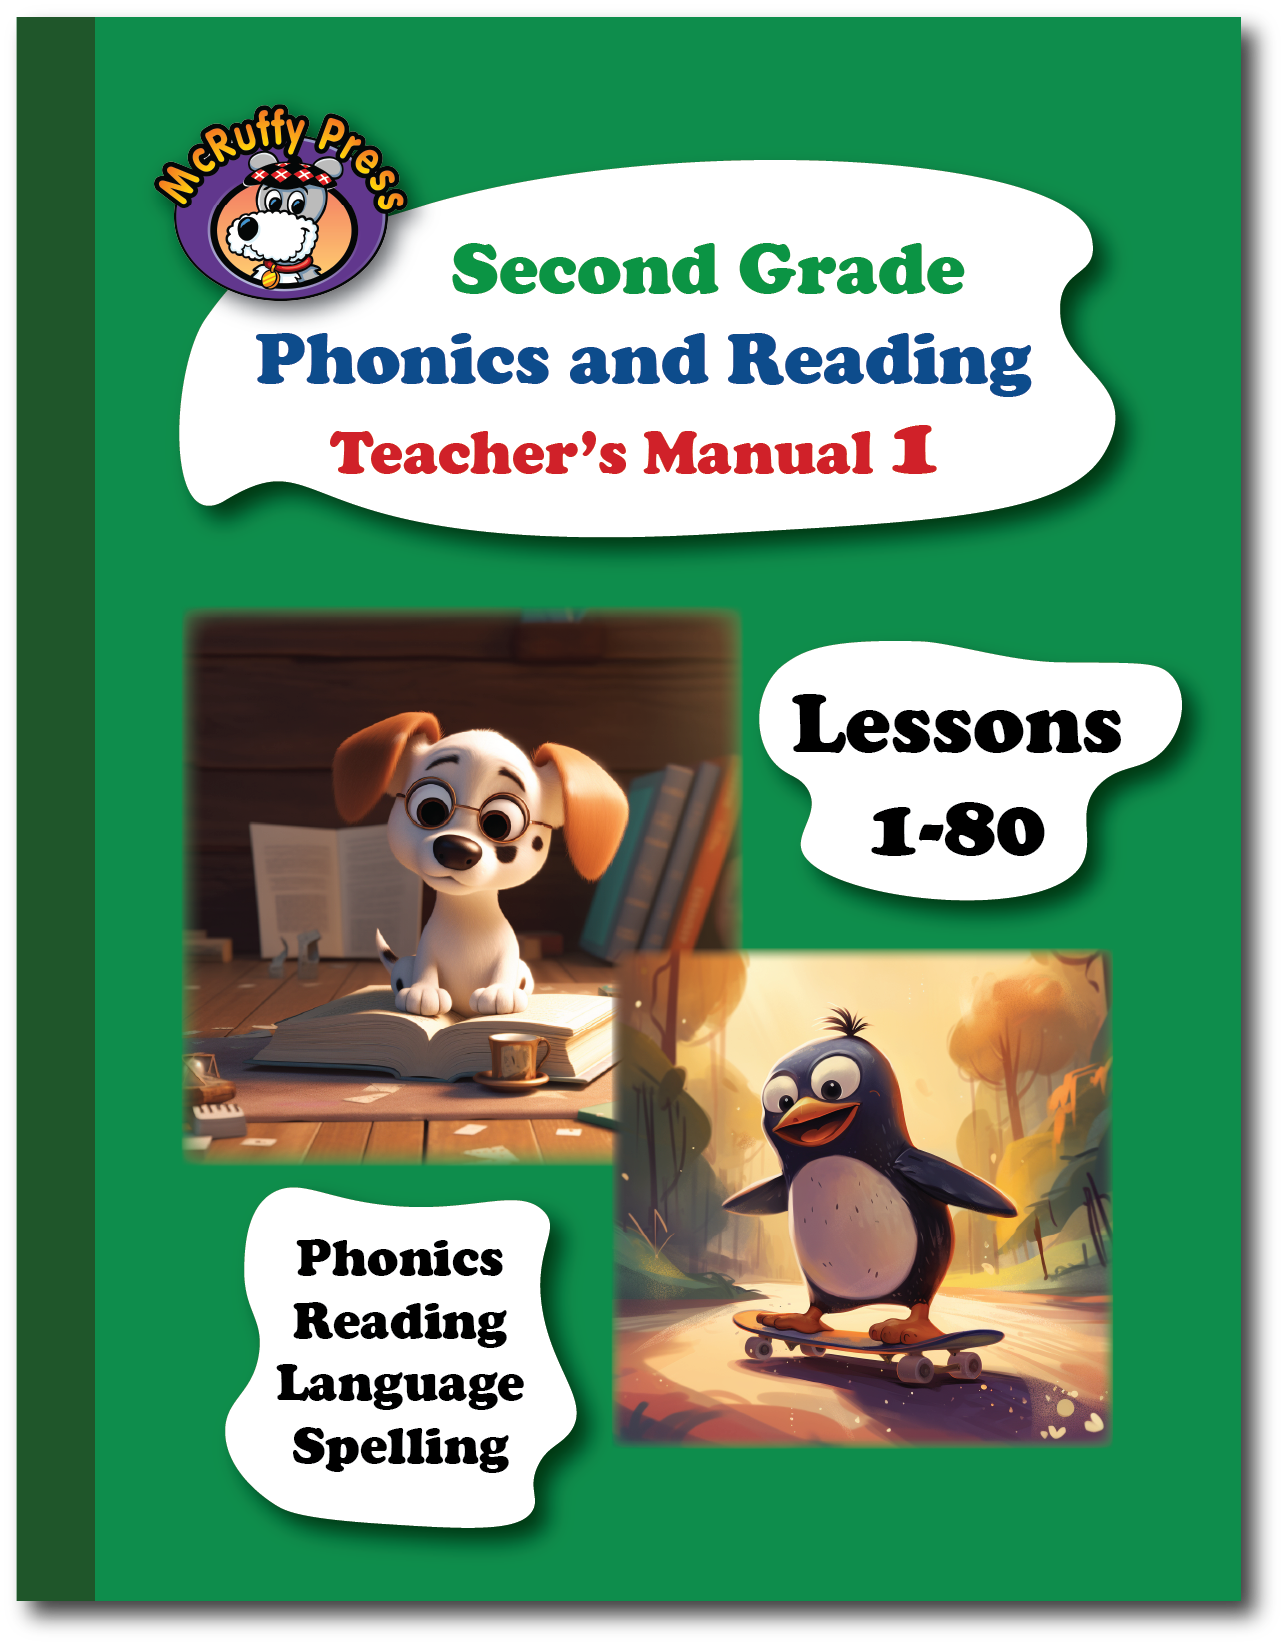 Second Grade SE Phonics and Reading Teacher's Manual Part 1